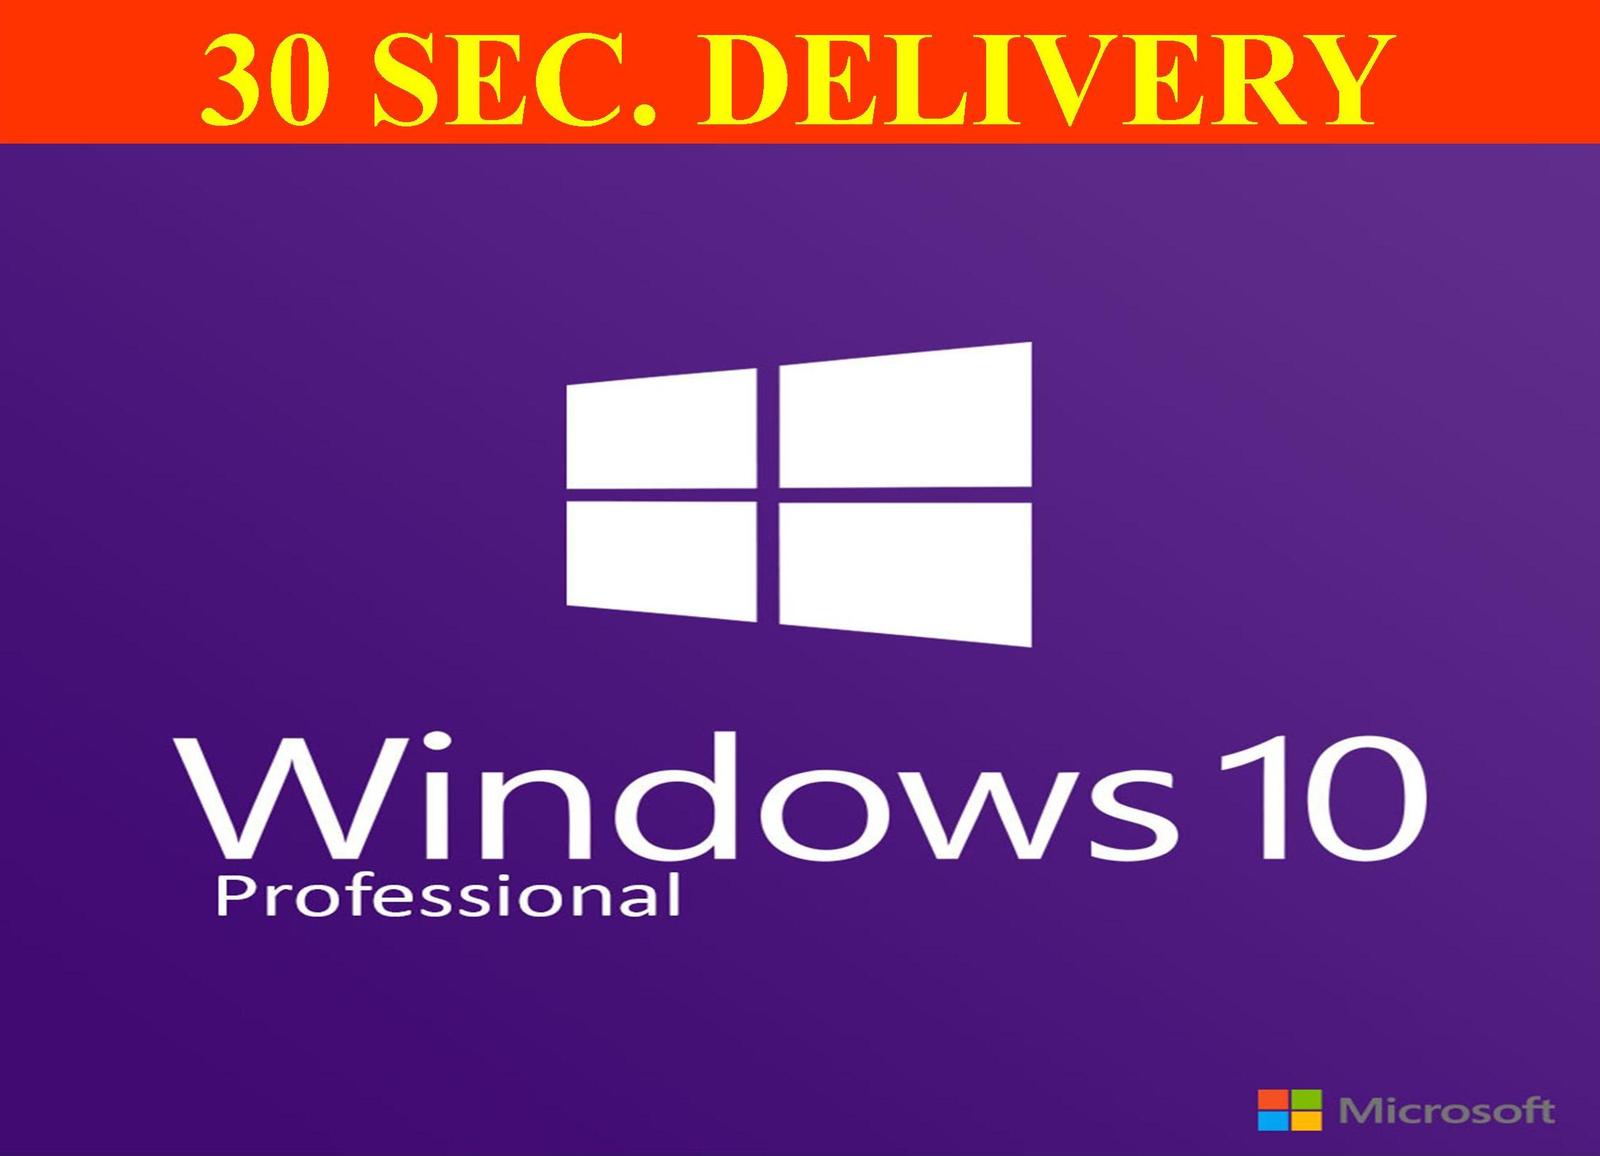 windows 10 key pro instant